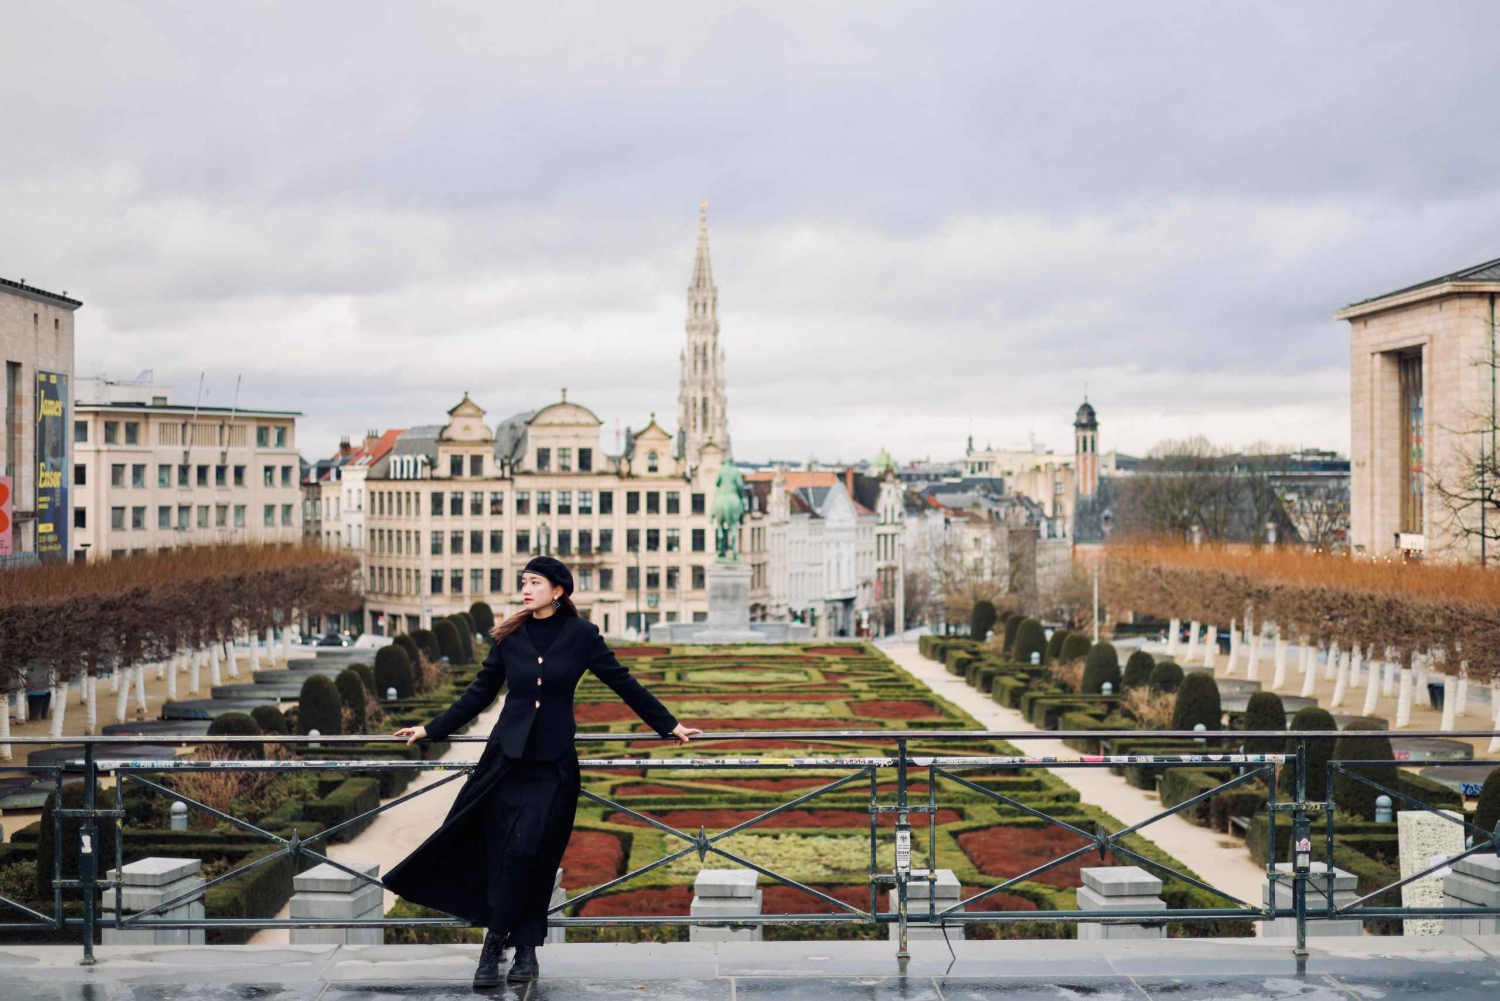 Fotografering i Brugge med en profesjonell fotograf